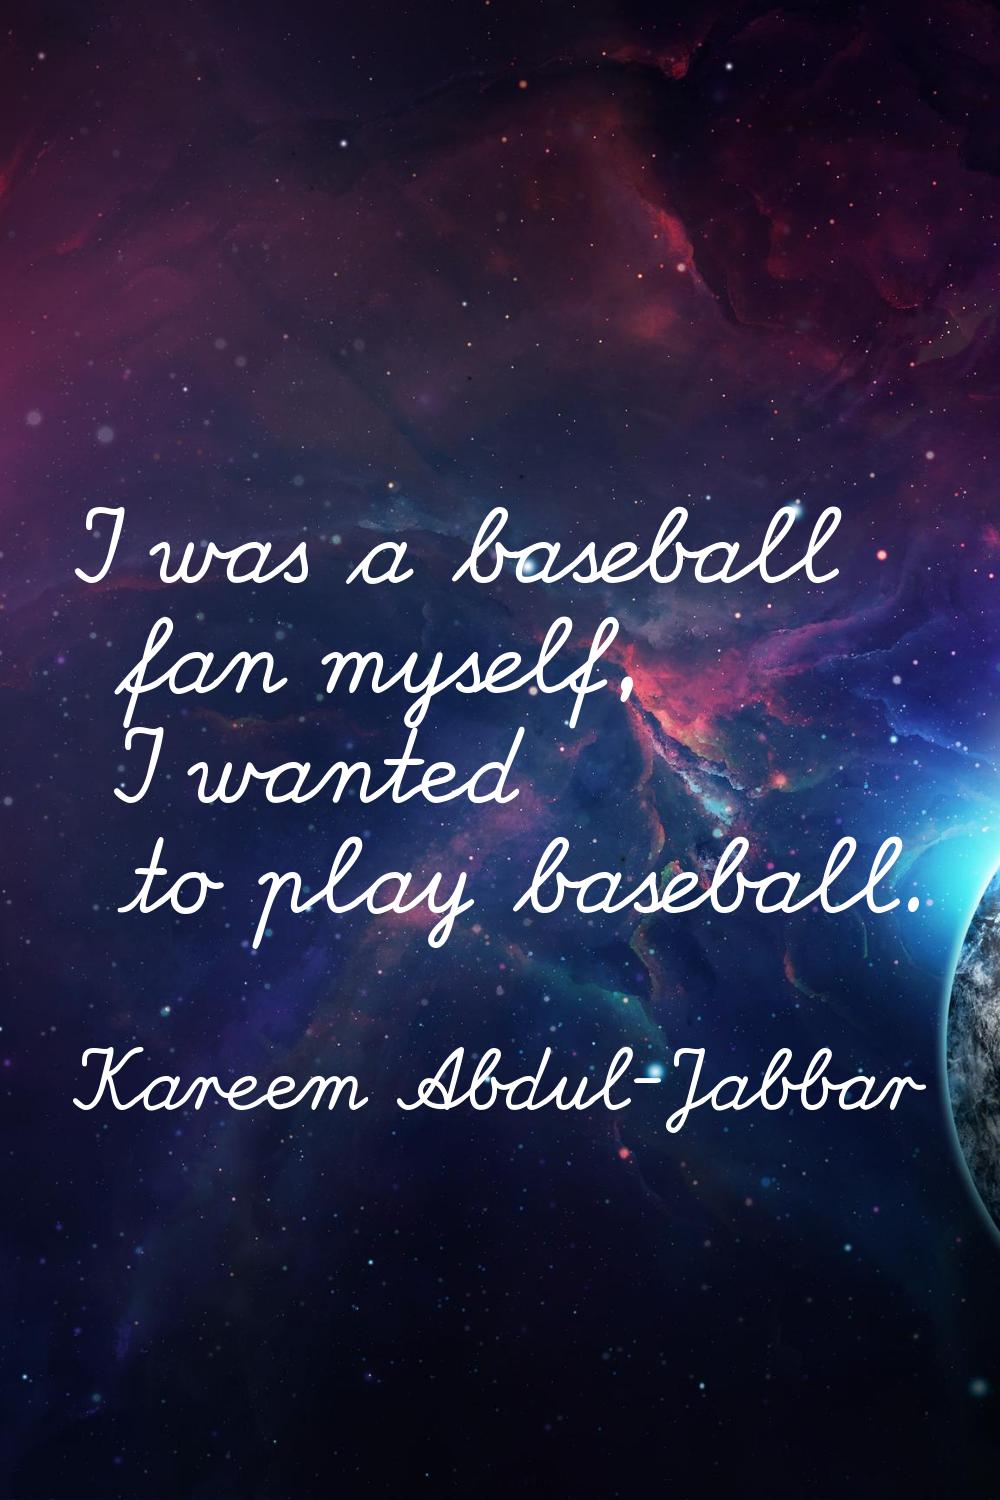 I was a baseball fan myself, I wanted to play baseball.